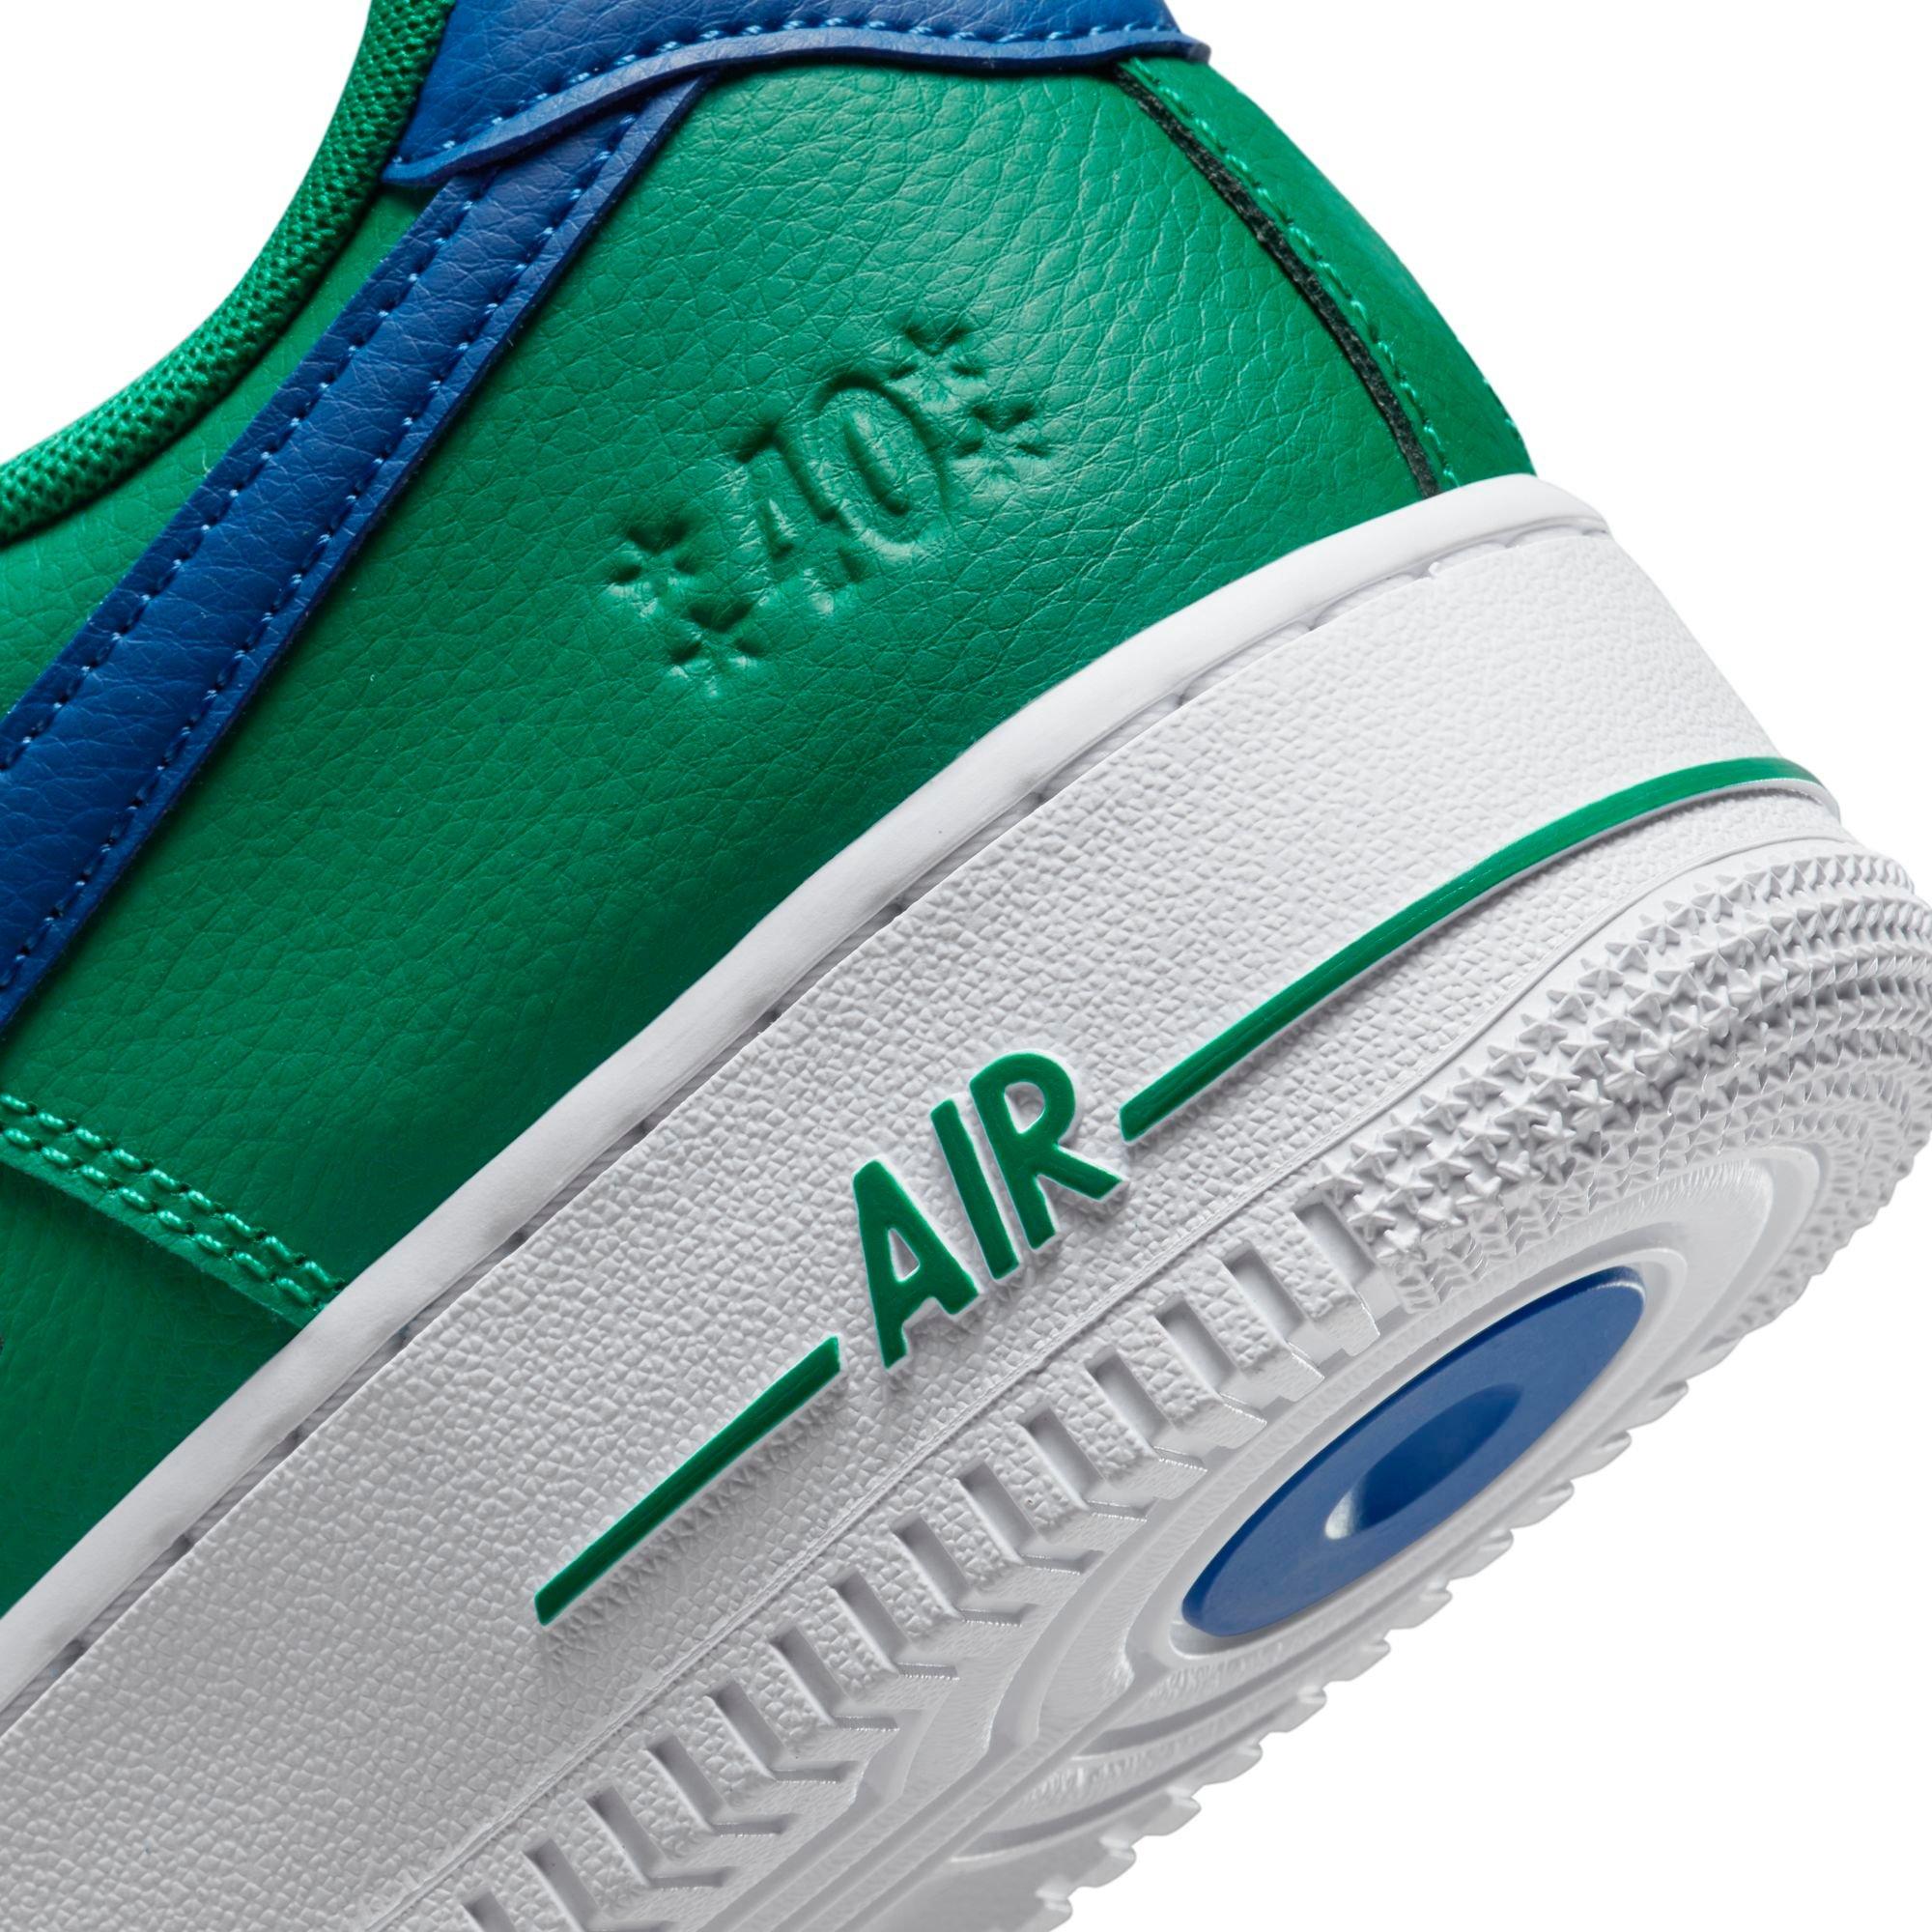 Nike Men's Air Force 1 '07 LV8 Shoes, Size 8, Sail/Blue Void